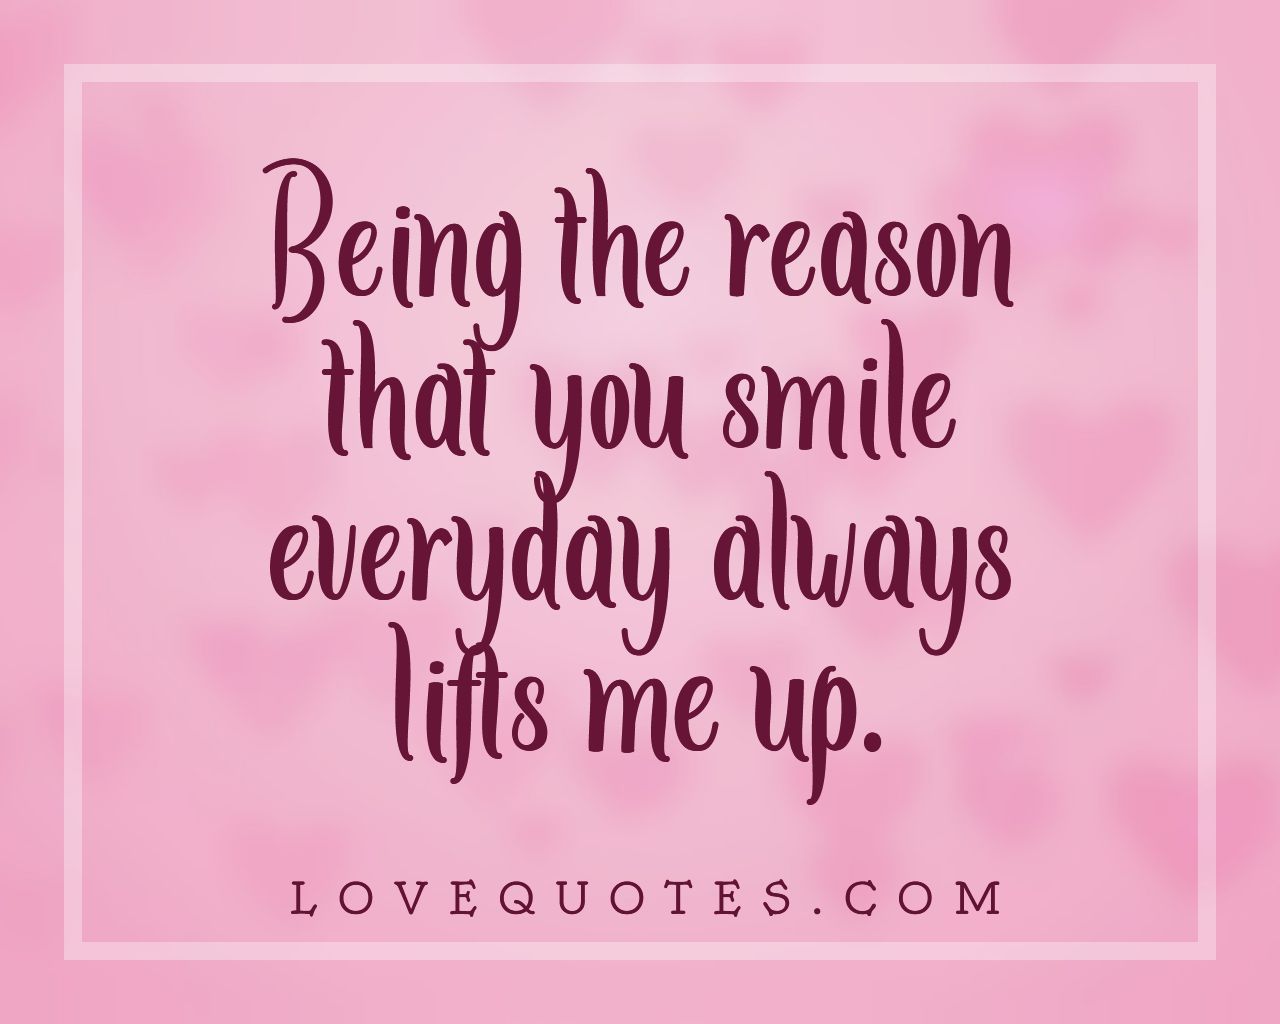 The Reason You Smile